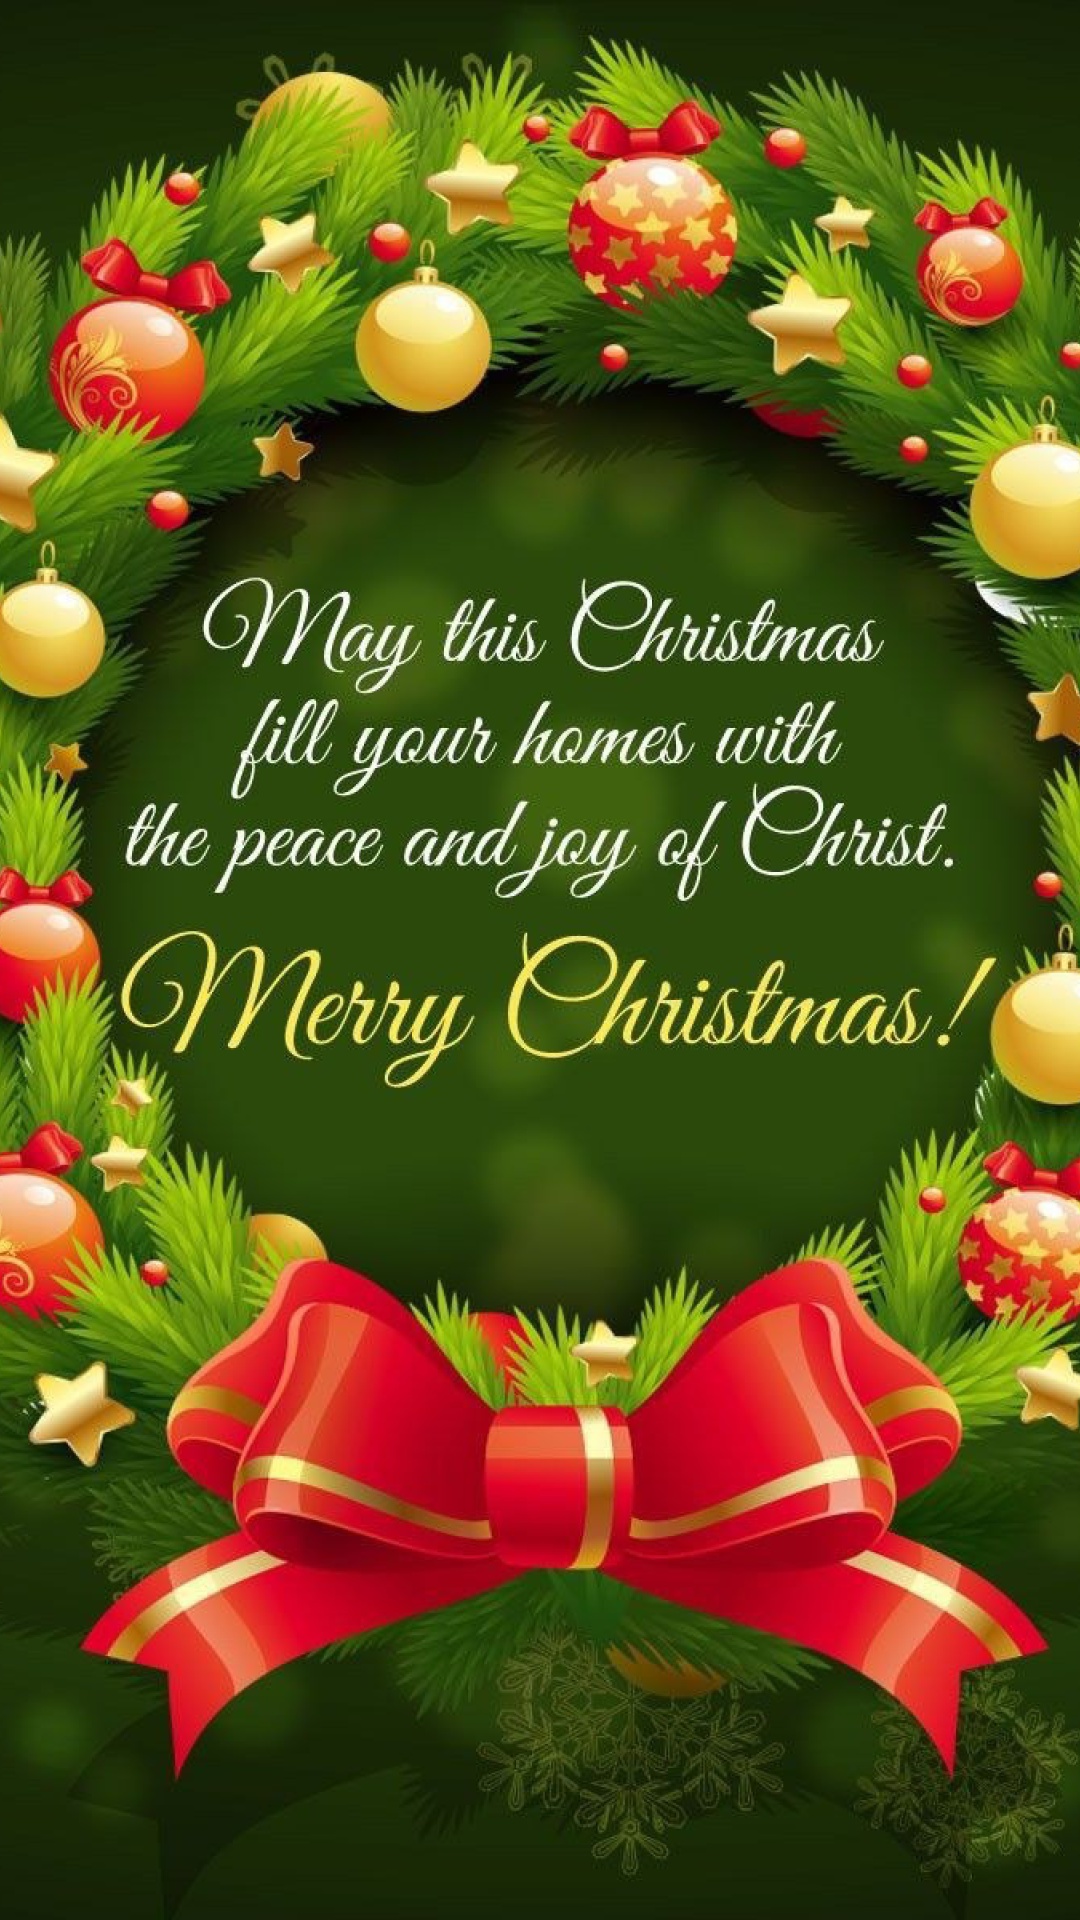 Merry Christmas 25 December SMS Wish wallpaper 1080x1920